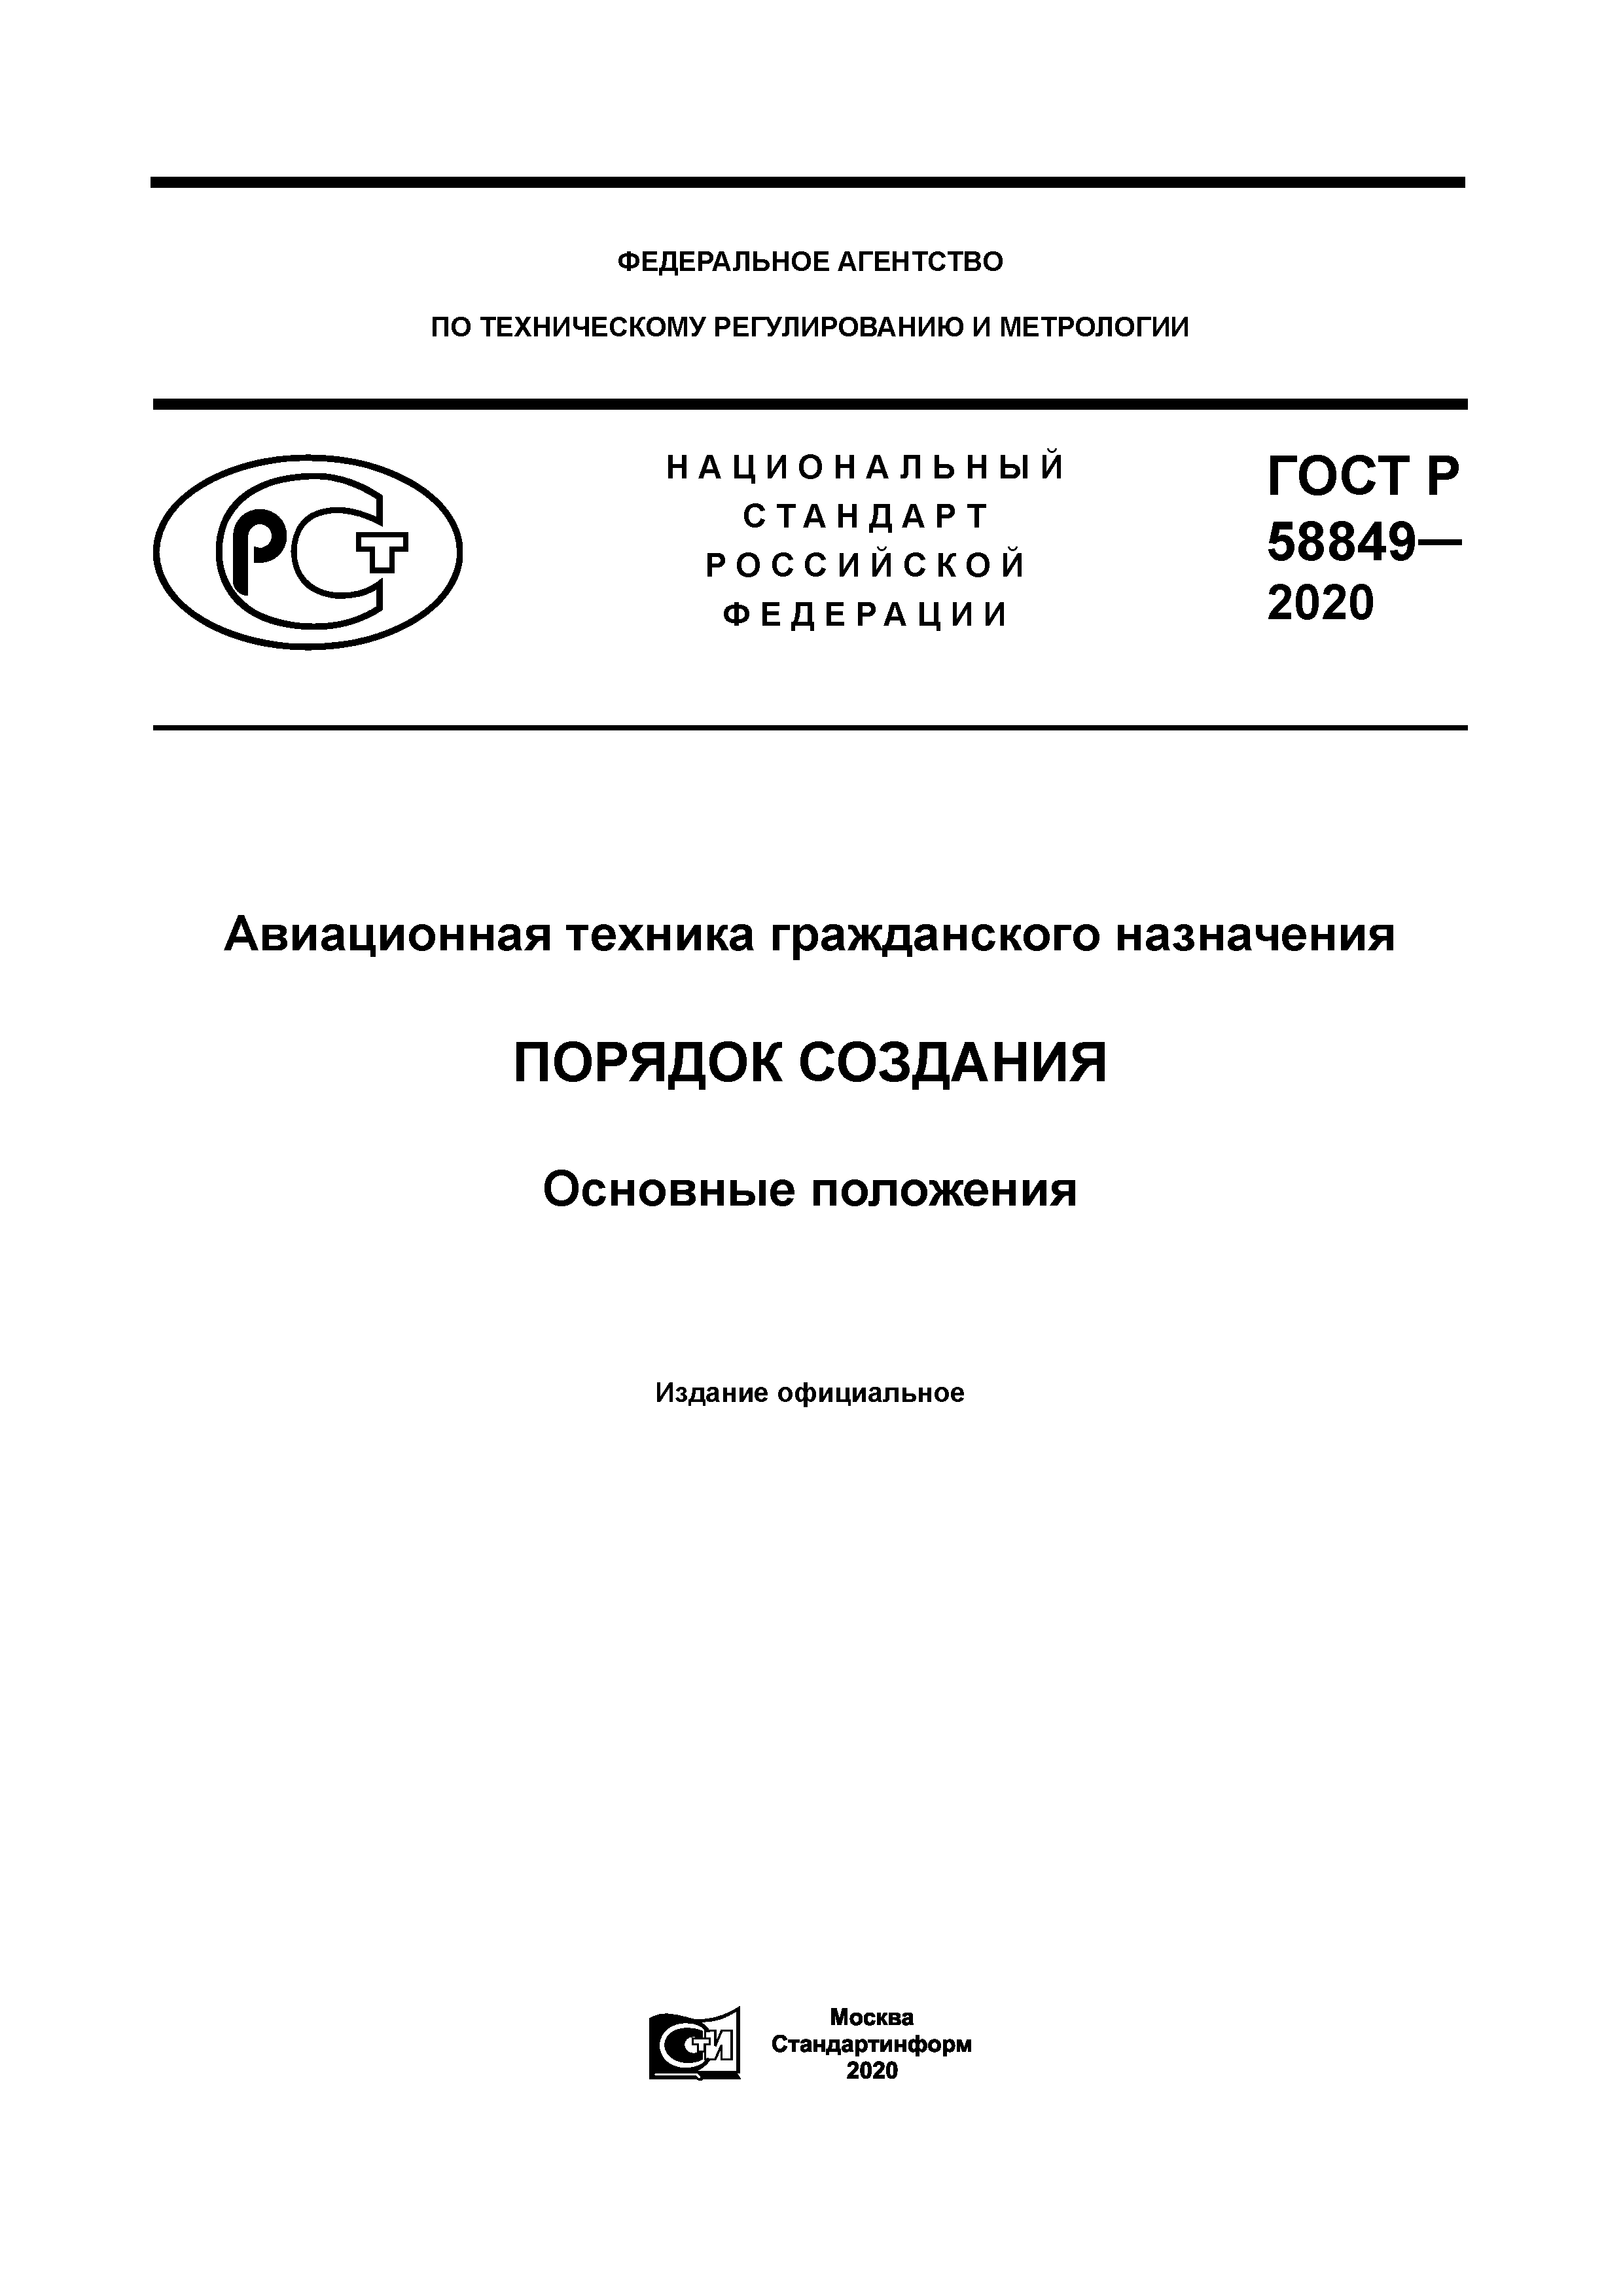 ГОСТ Р 58849-2020